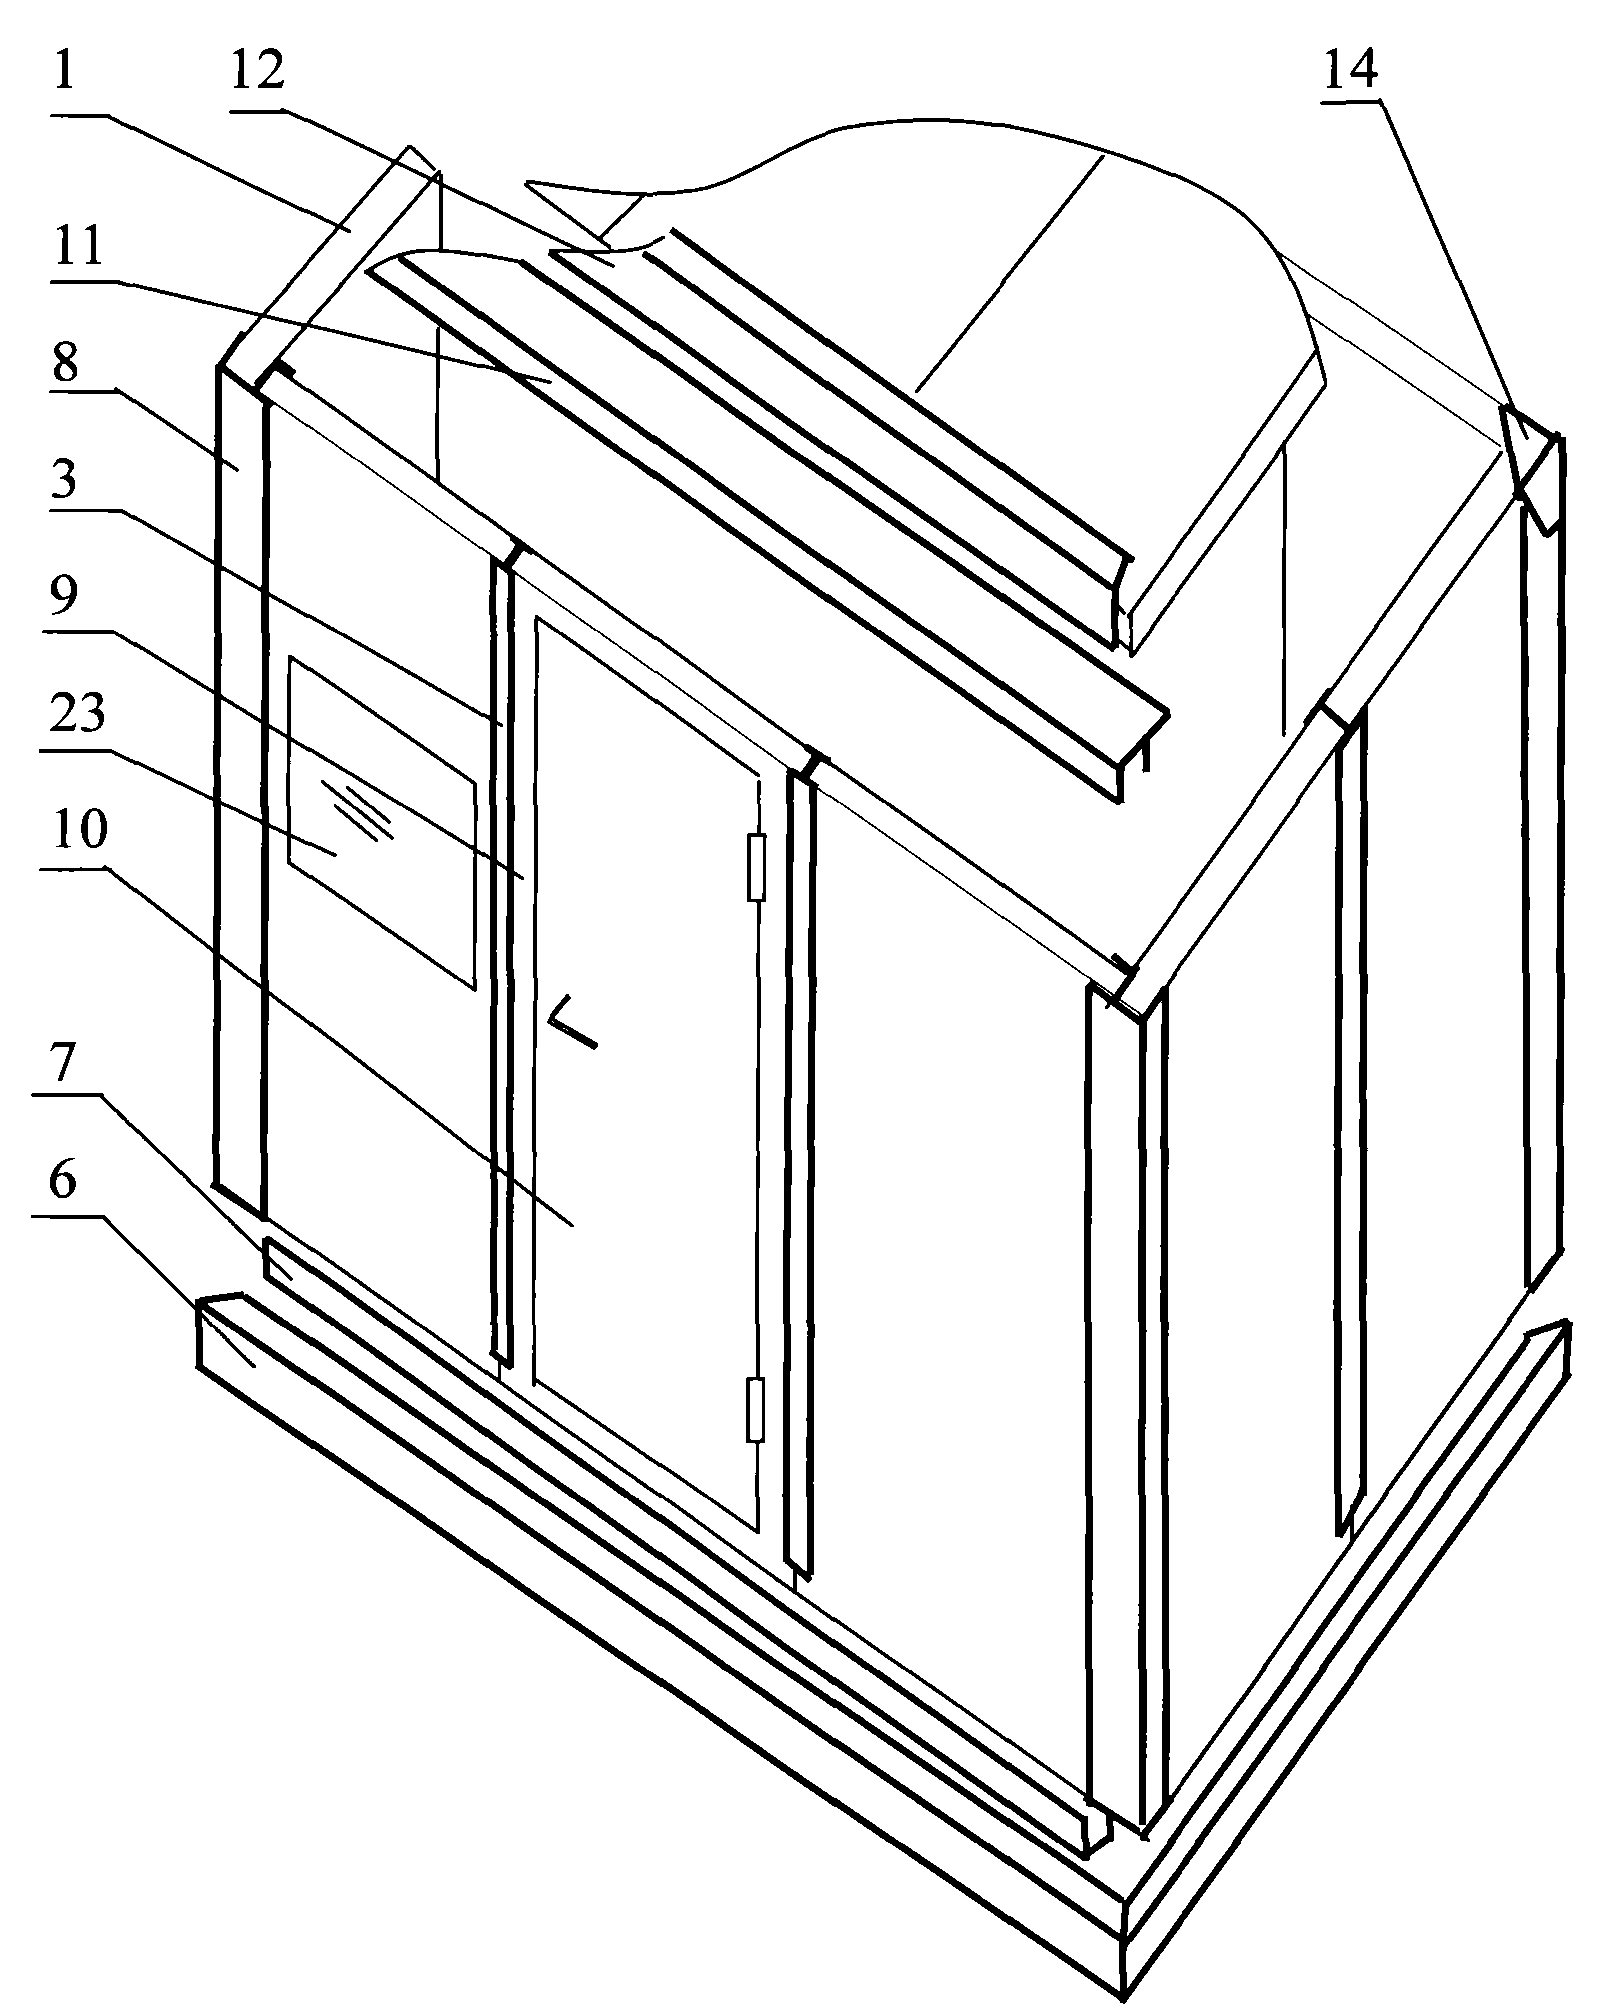 Assembled metal sound insulation chamber